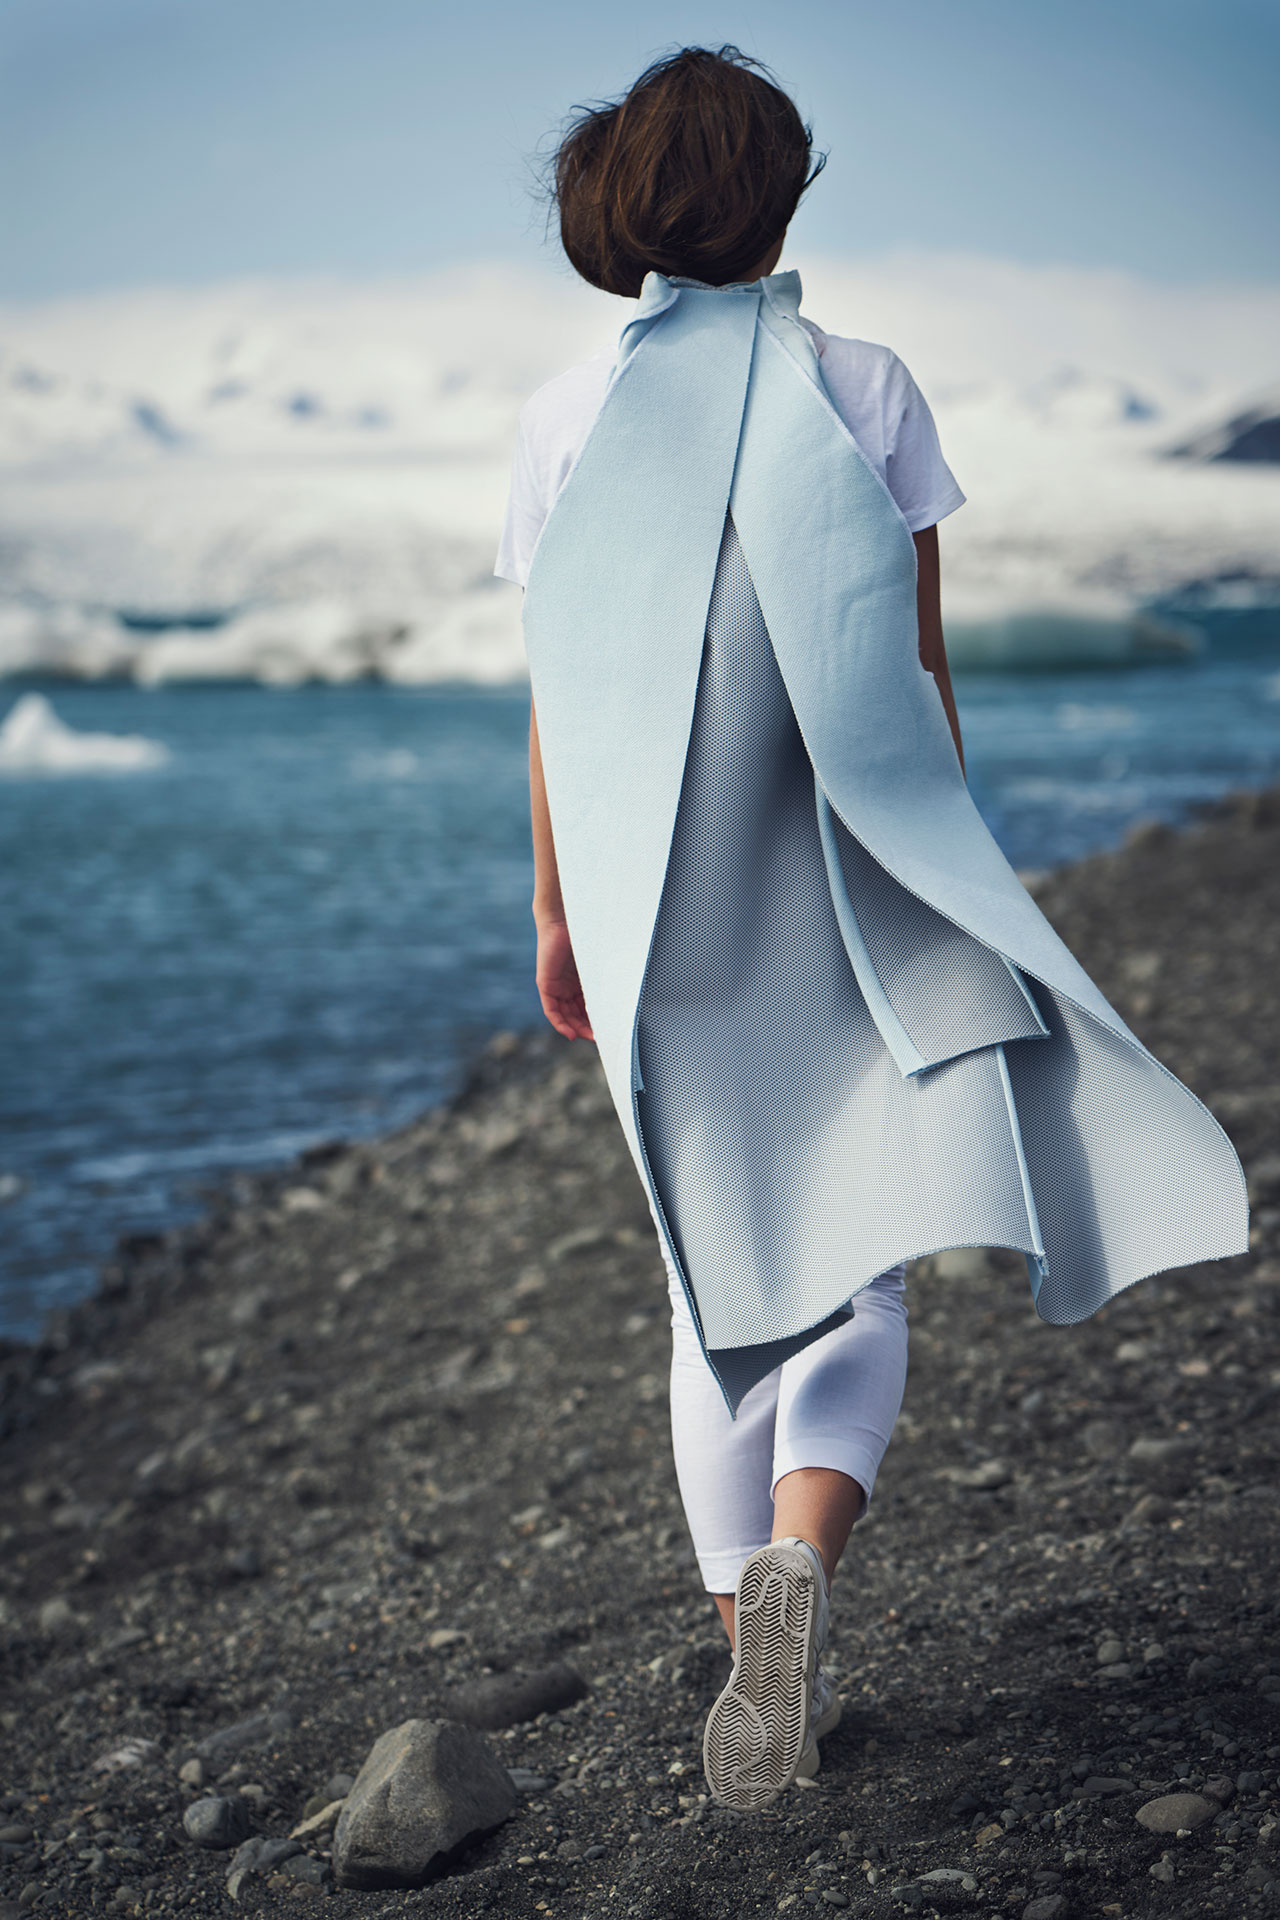 Félicie Eymard, Chrysalid Coat, from Metamorphosis Collection. Photo by Julien Hayard.